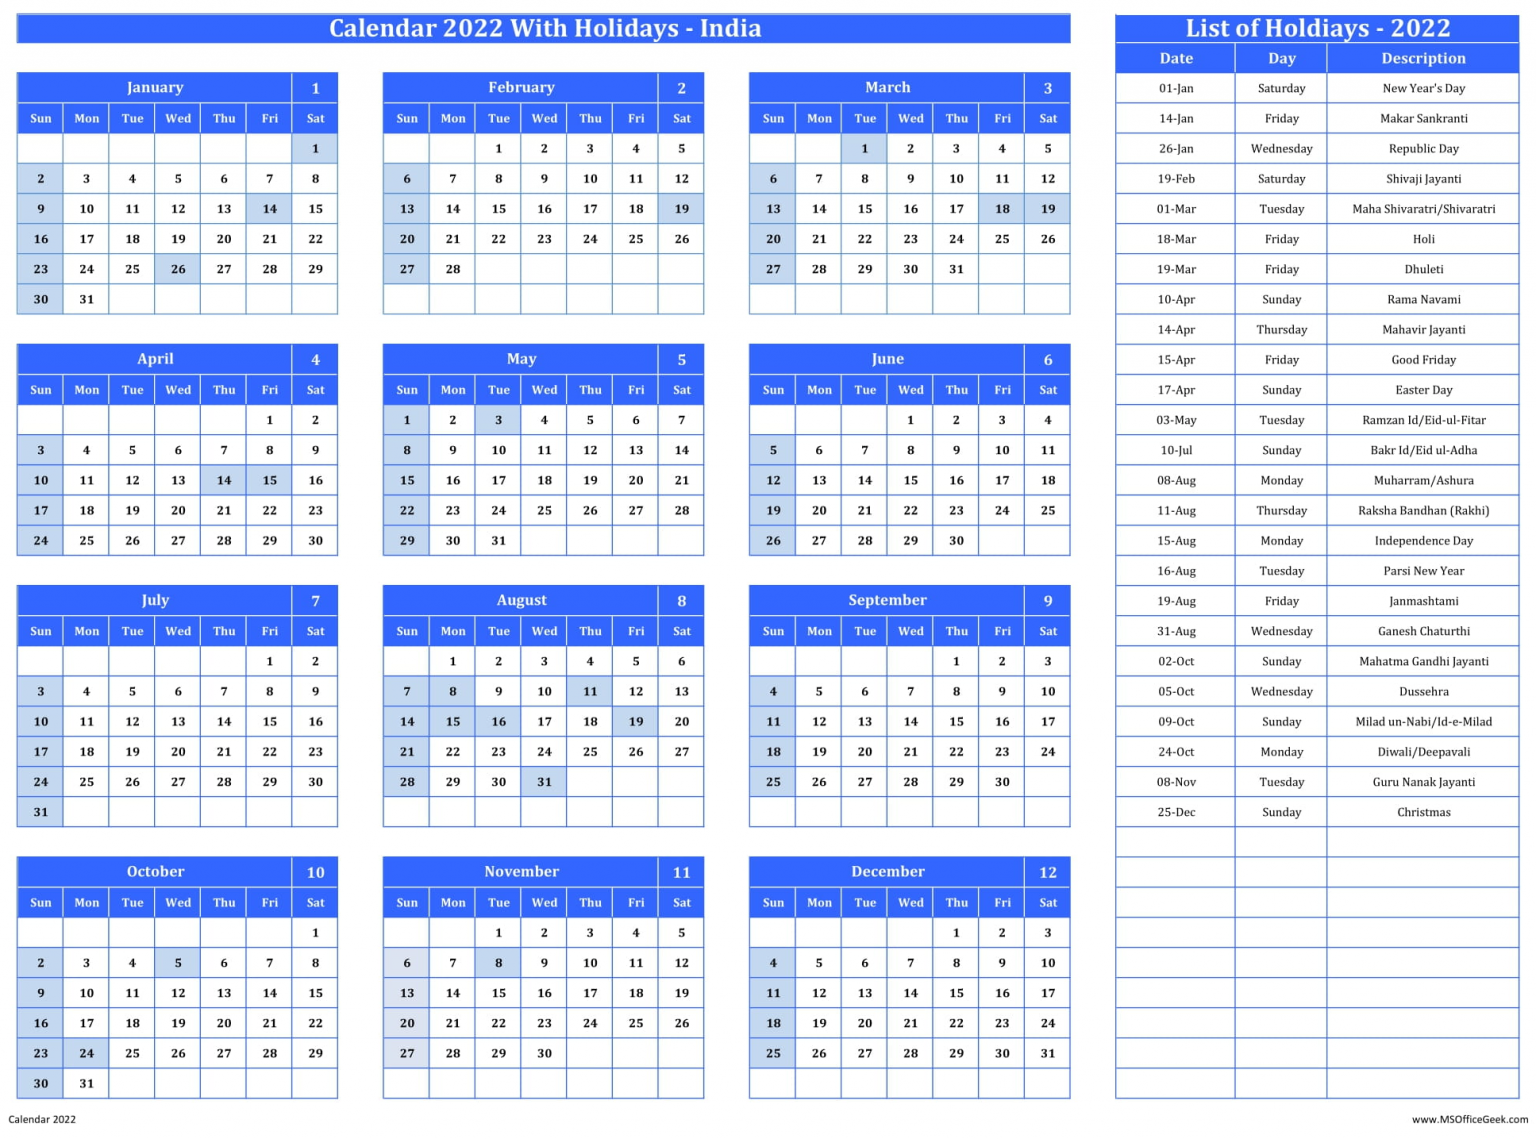 Printable Calendar 2022 With Indian Holidays - MSOfficeGeek